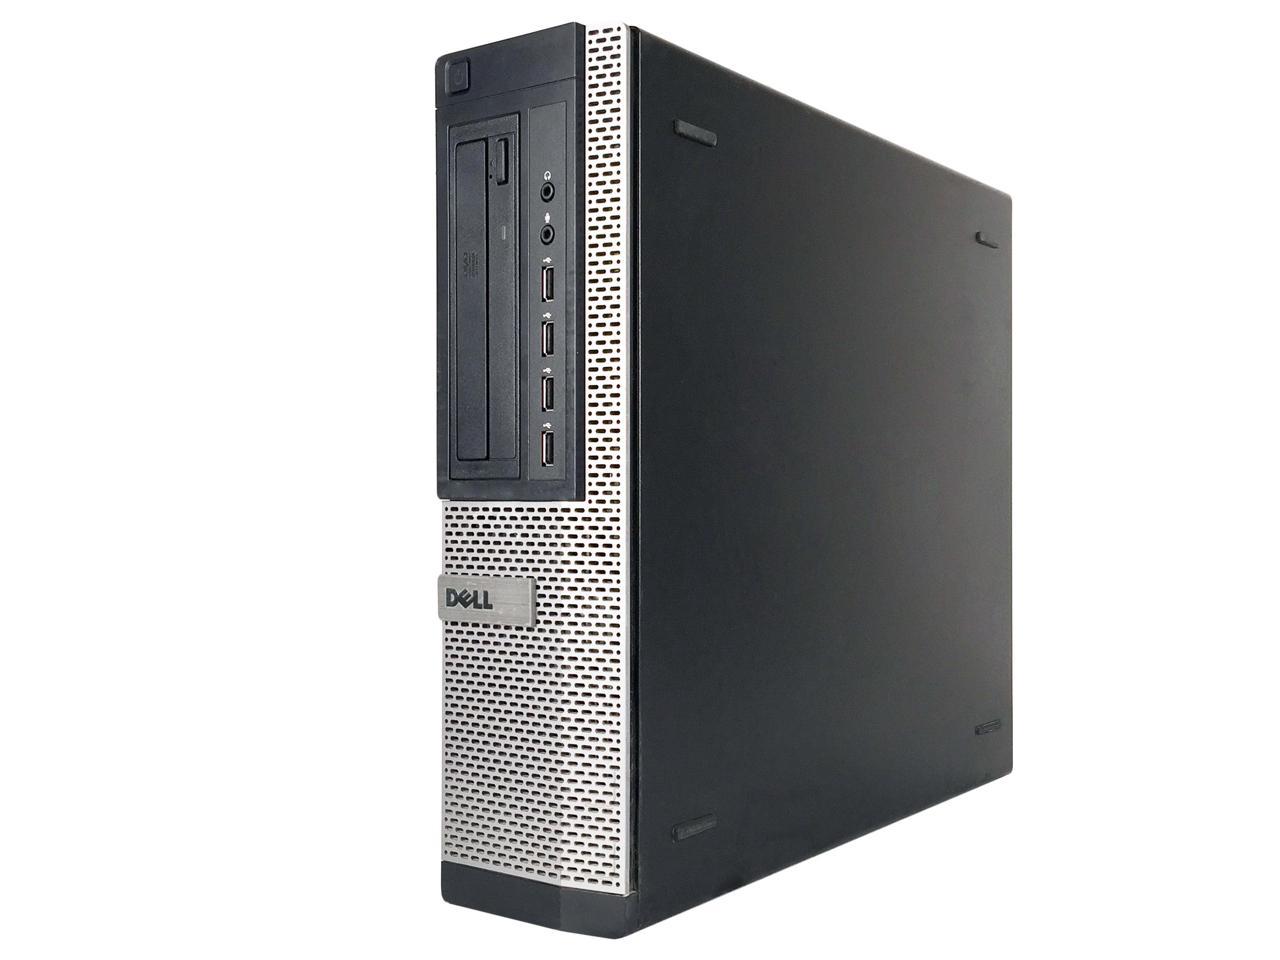 Refurbished Dell Grade A OptiPlex 990 Desktop Computer, Intel Core I5-2500 (3.3 GHz), 4G DDR3, 250G HDD, DVD, WIFI, Windows 10 Home 64-bit (English/Spanish), 1 Year Warranty